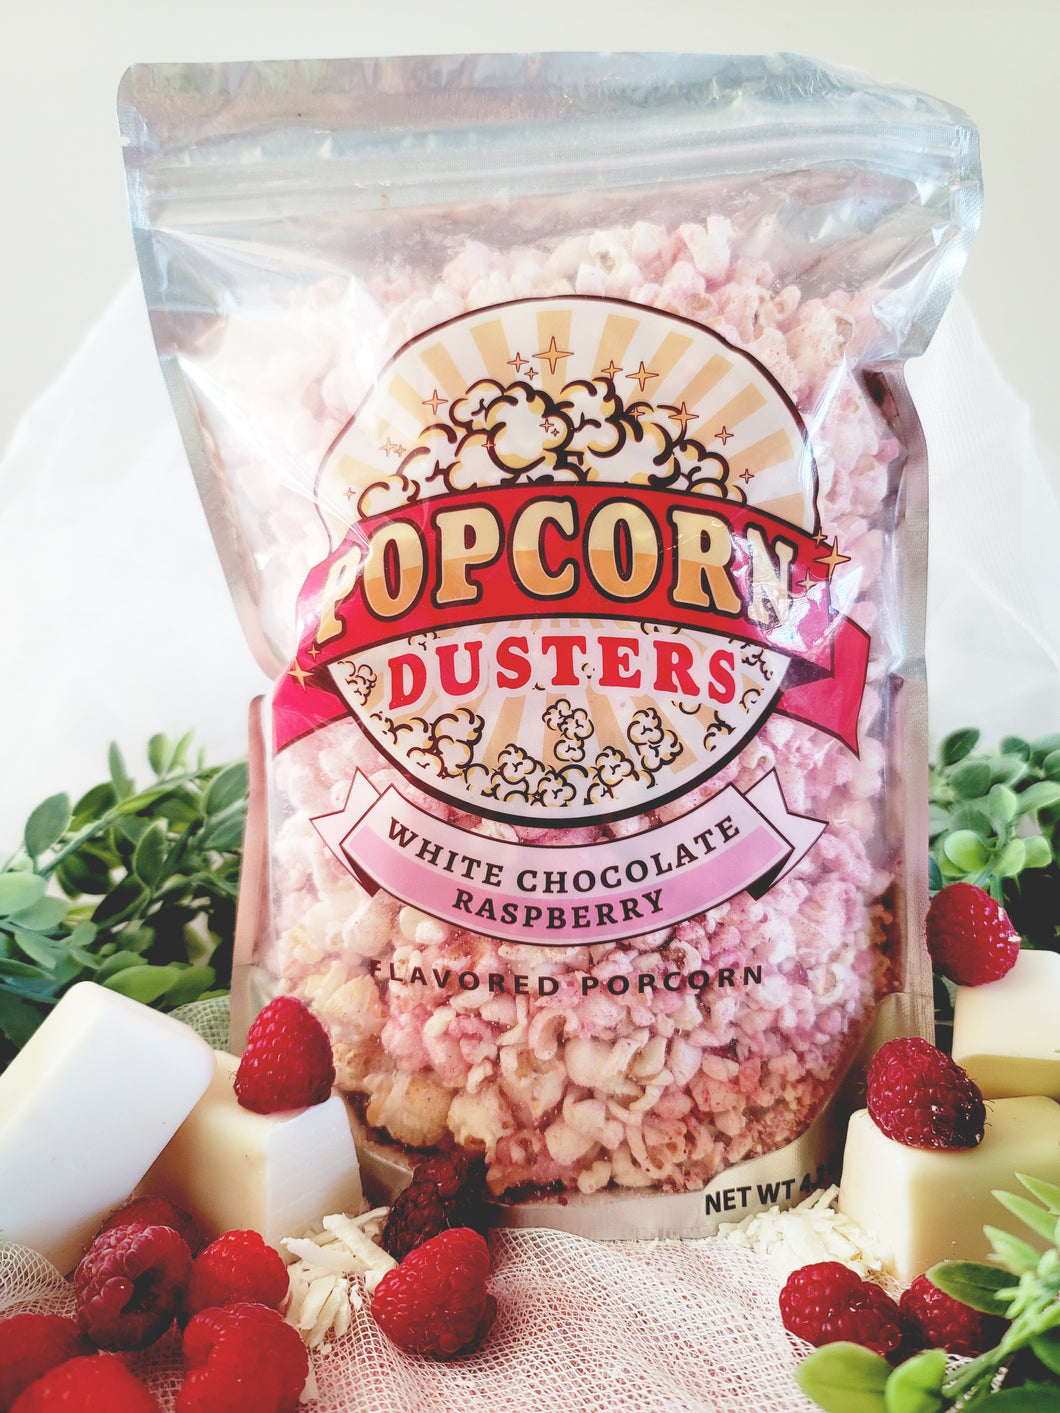 White Chocolate Raspberry Flavored Popcorn